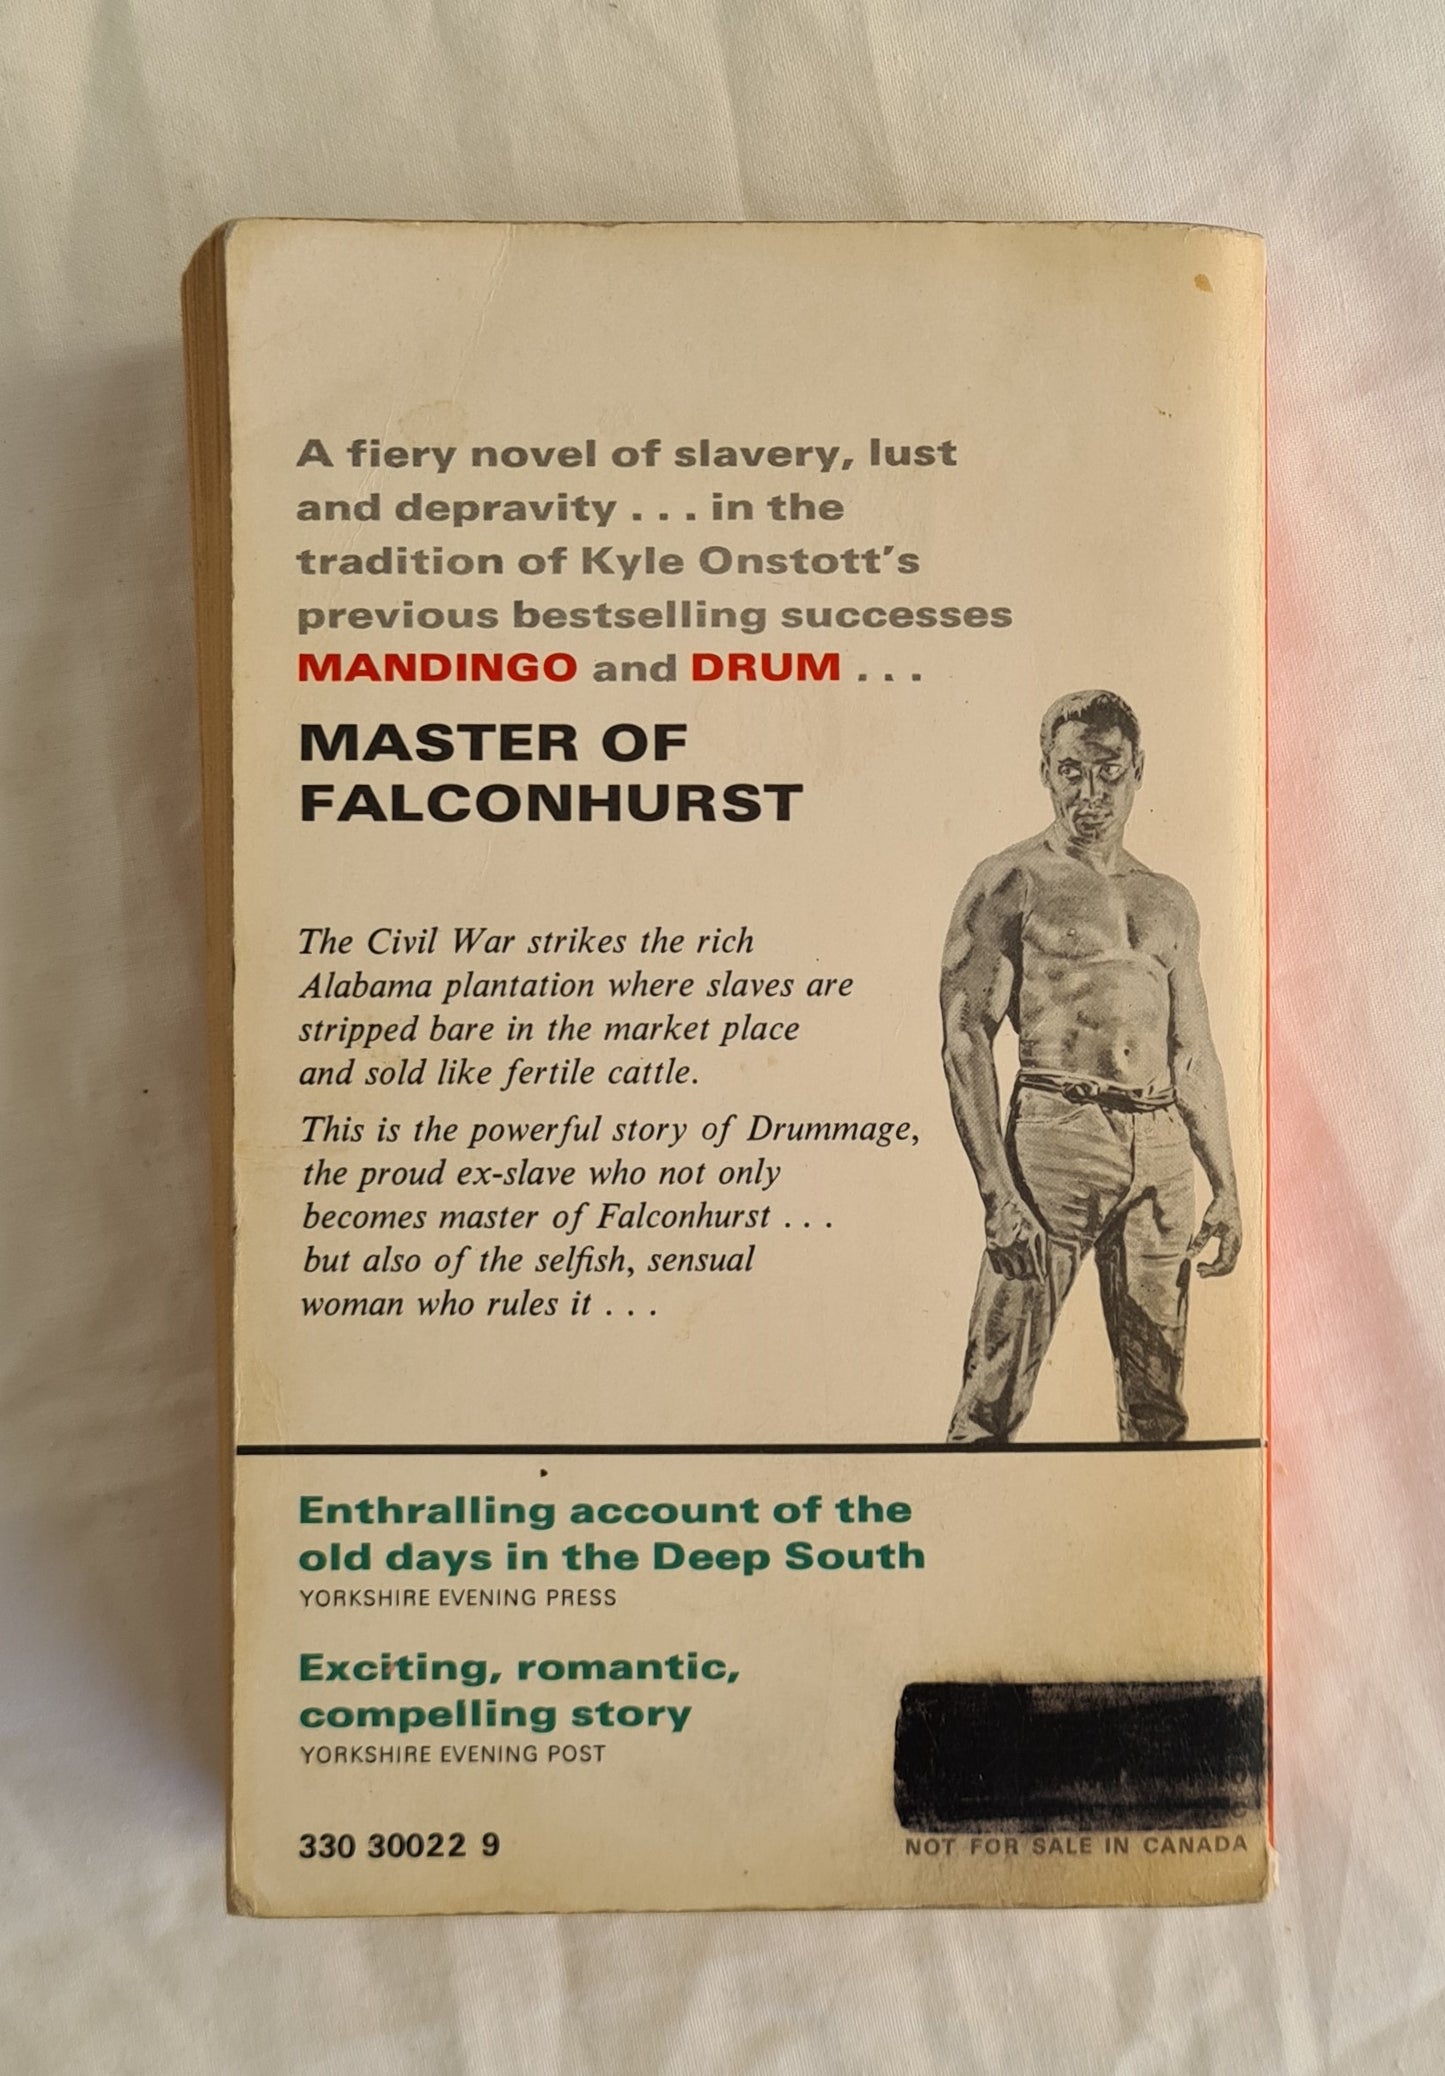 Master of Falconhurst by Kyle Onstott